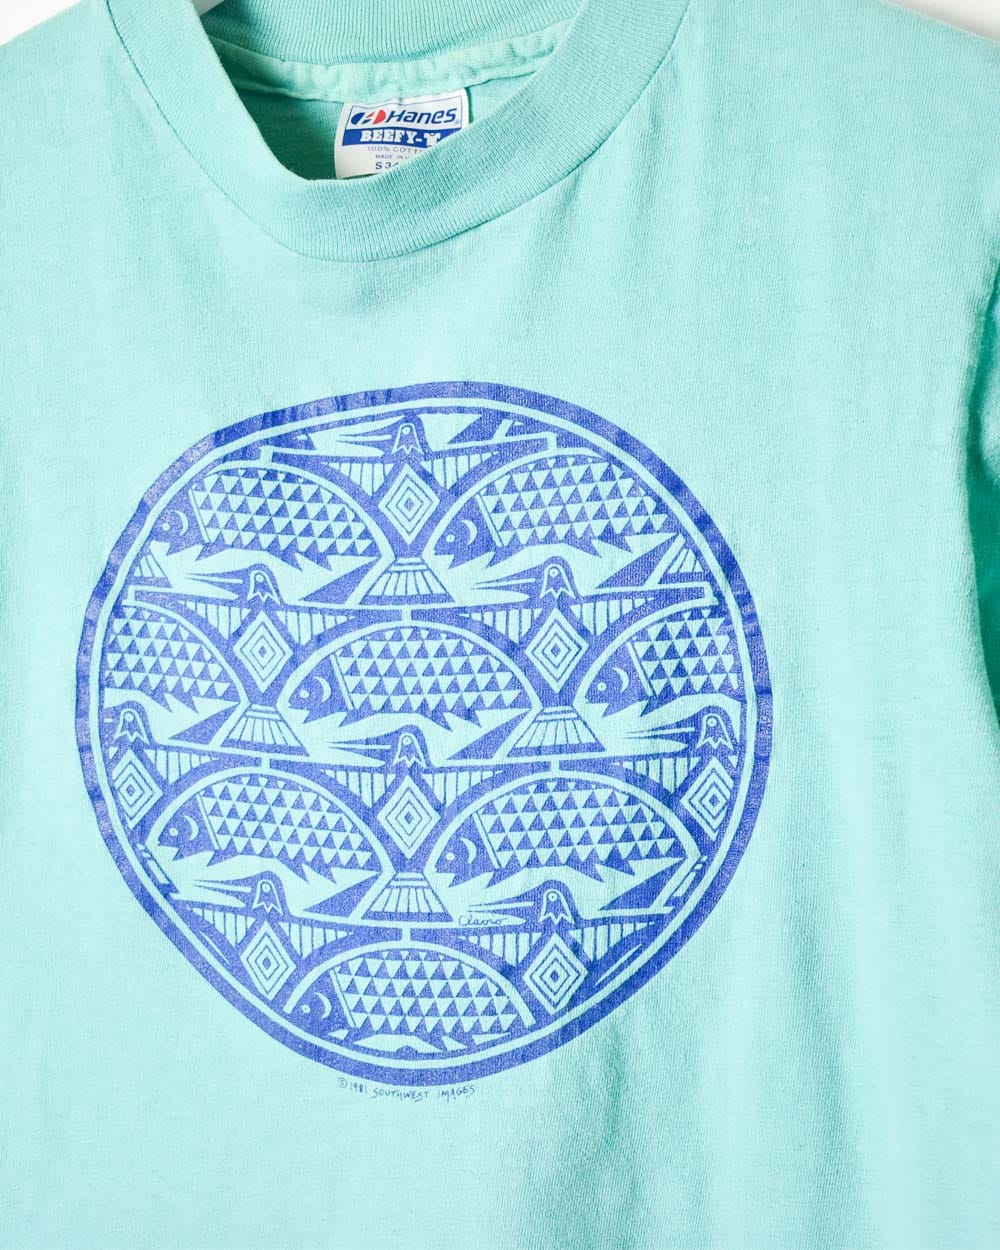 BabyBlue Aztec Print Single Stitch T-Shirt - X-Small Women's